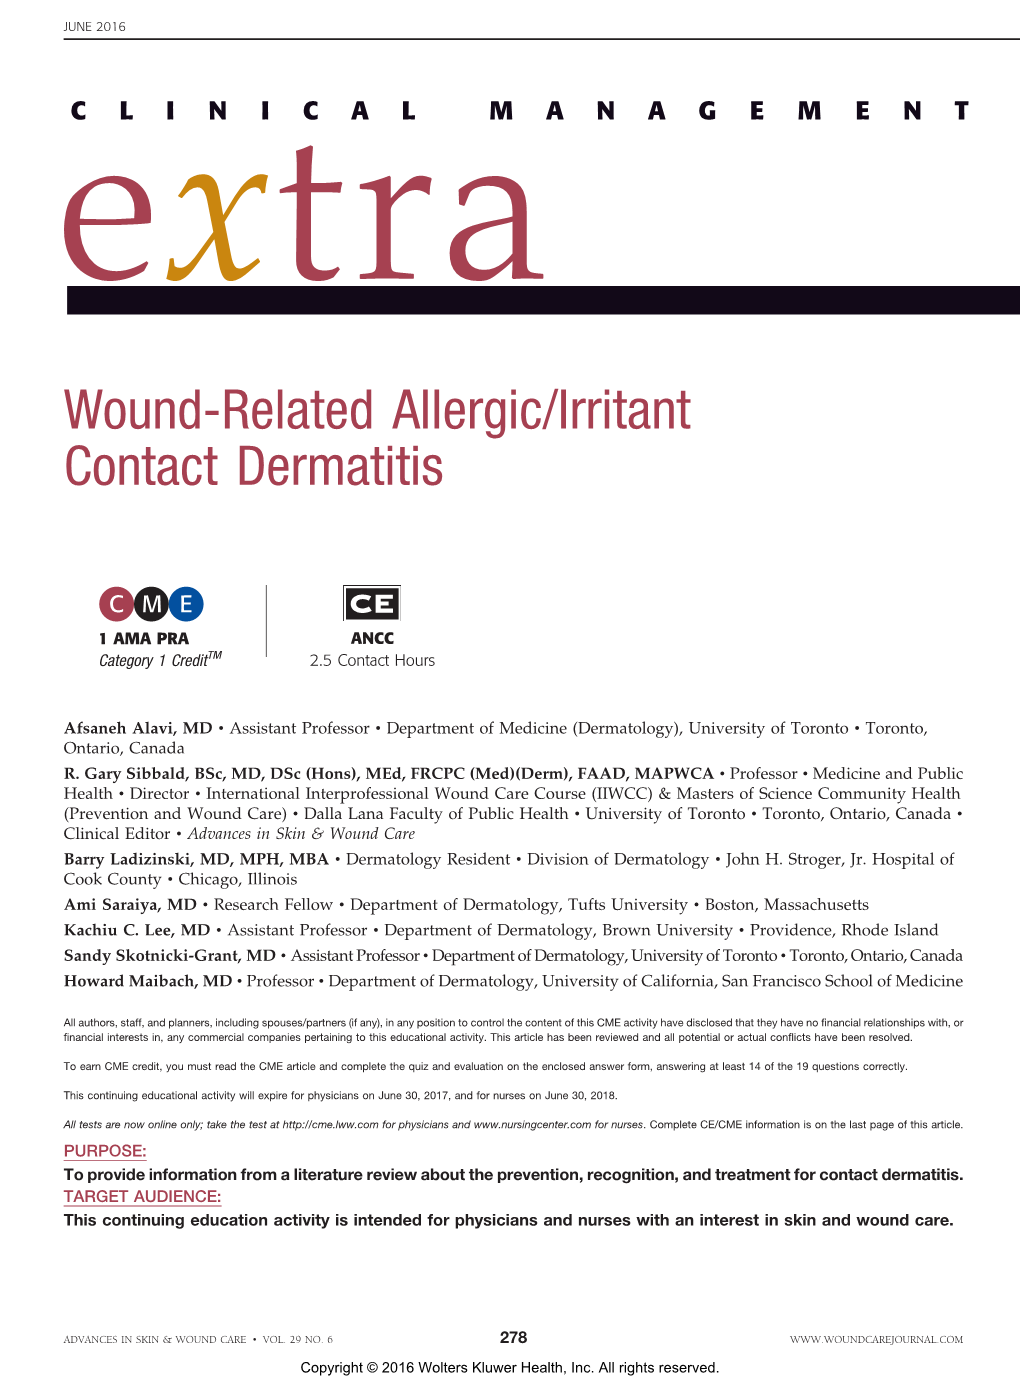 Wound-Related Allergic/Irritant Contact Dermatitis